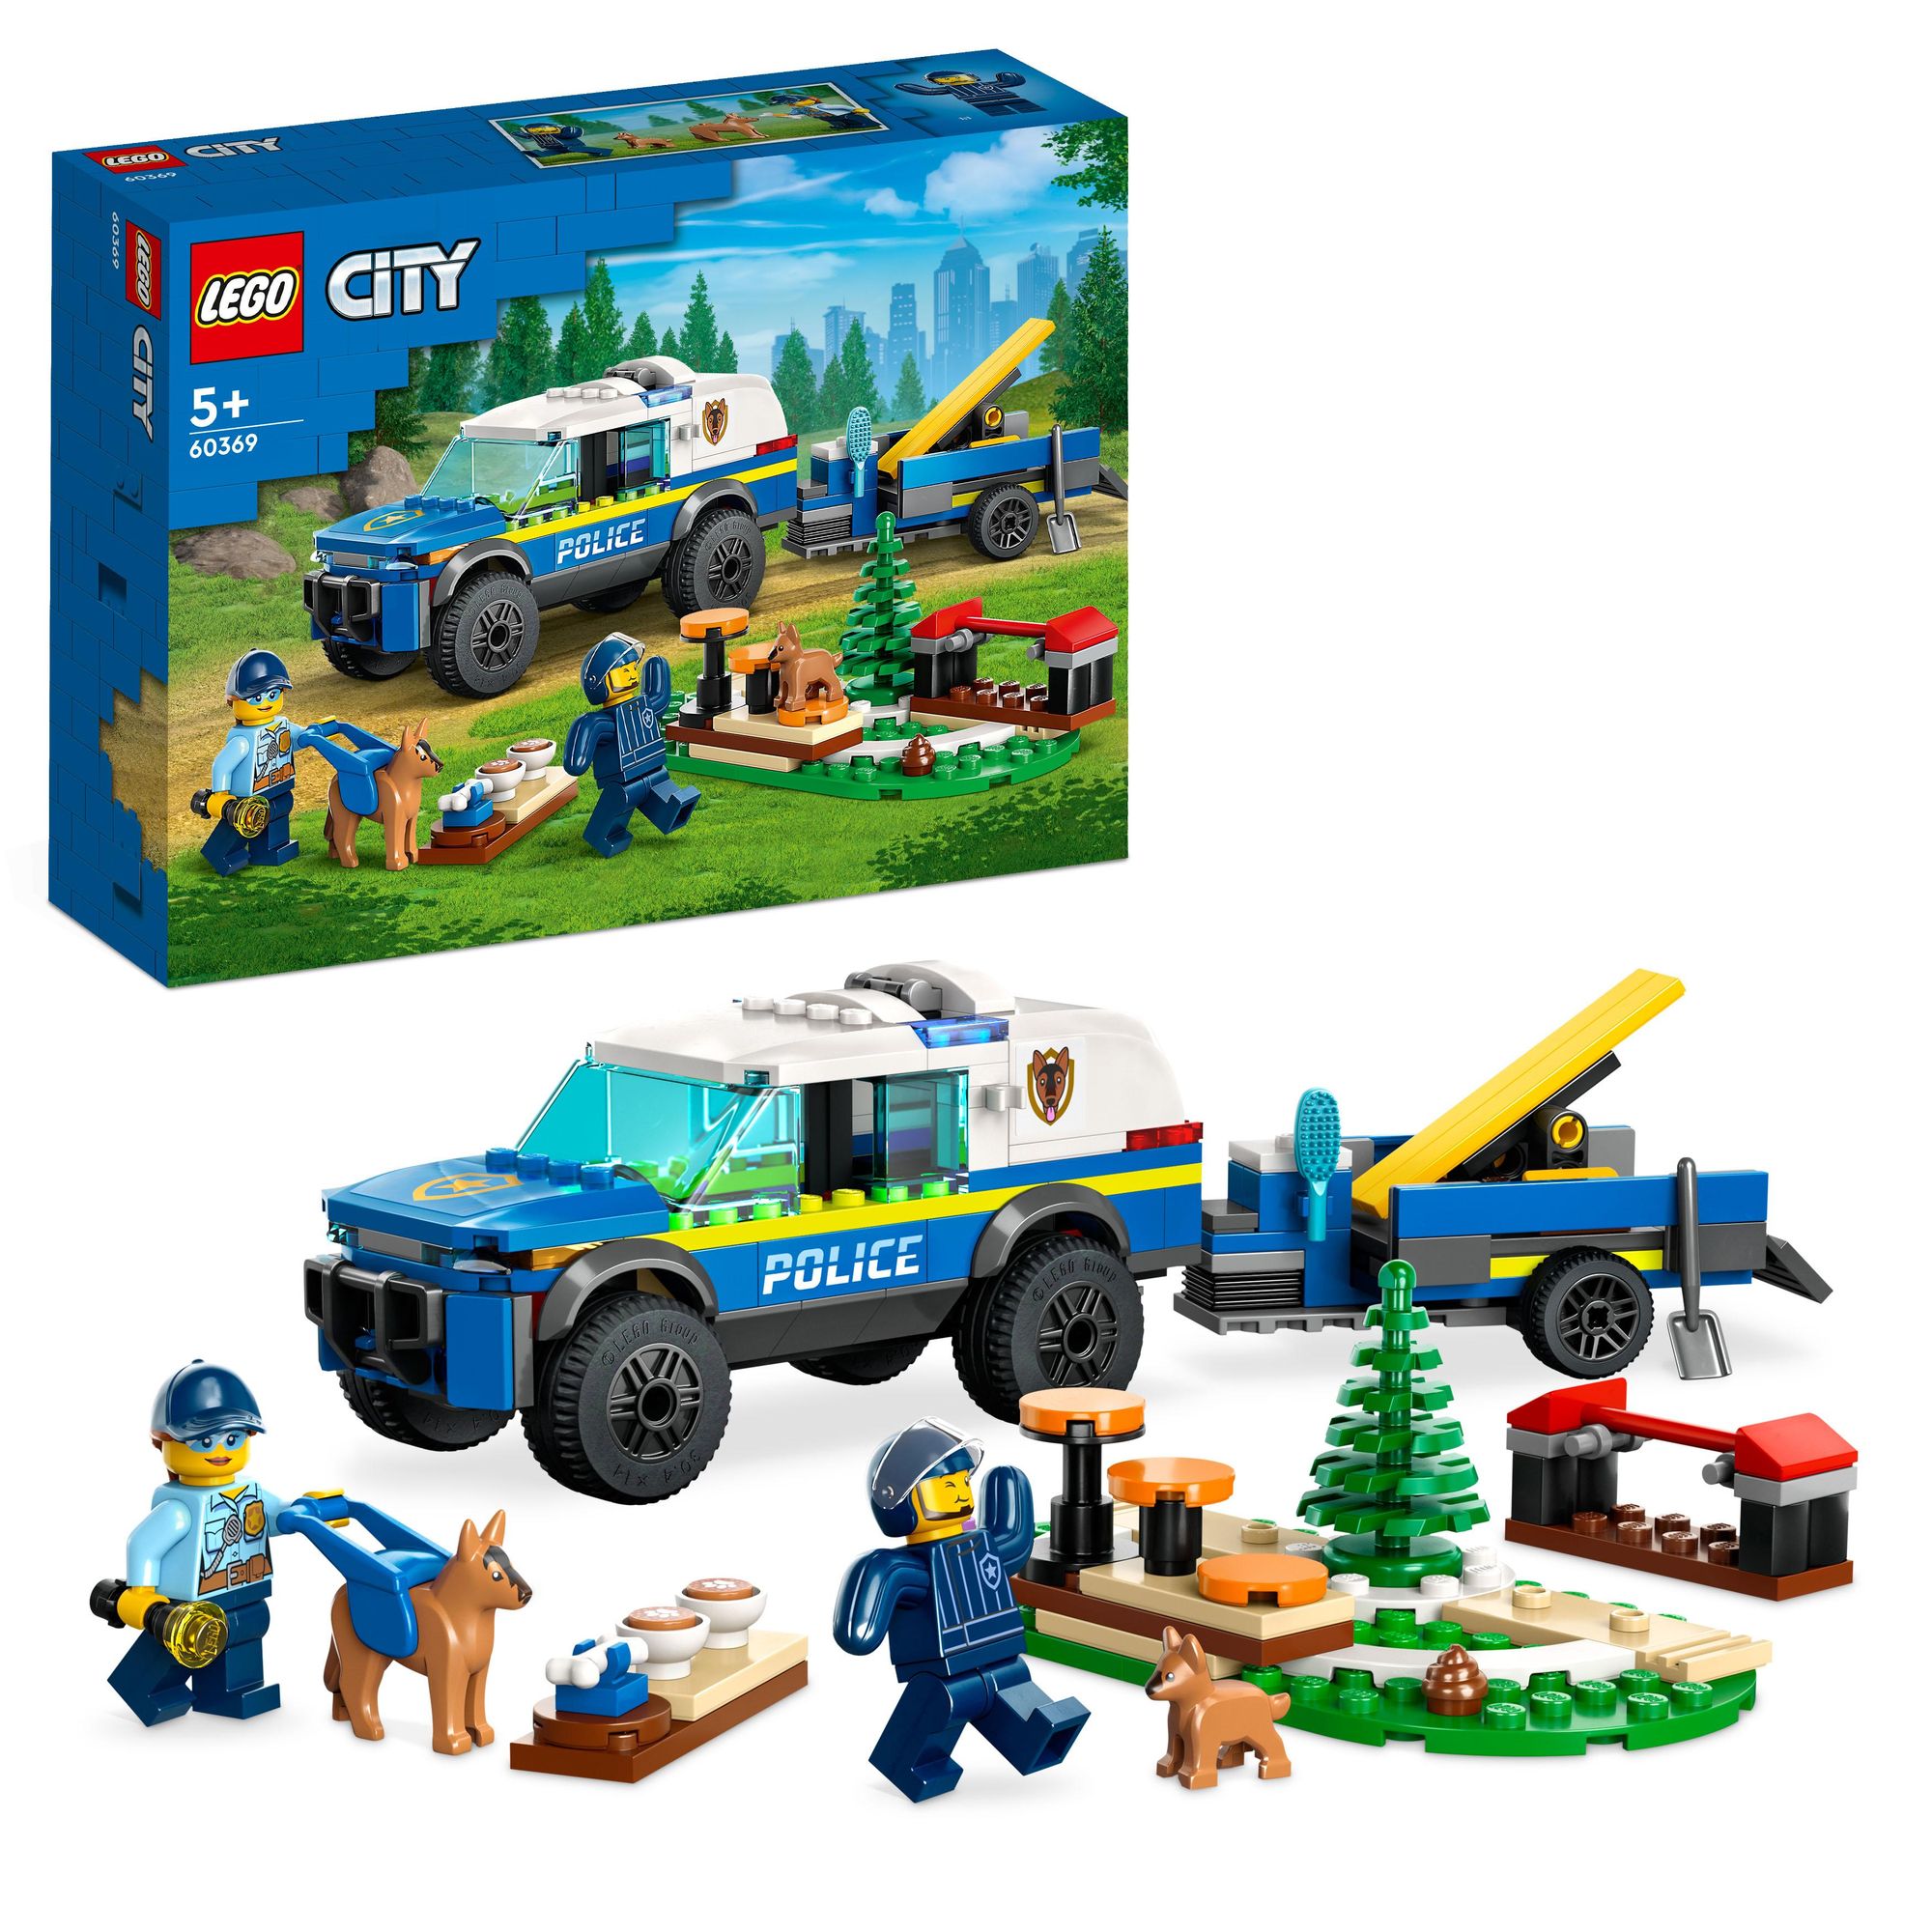 LEGO City 60369 Mobiles Polizeihunde-Training, Spielzeug-Auto\' kaufen -  Spielwaren